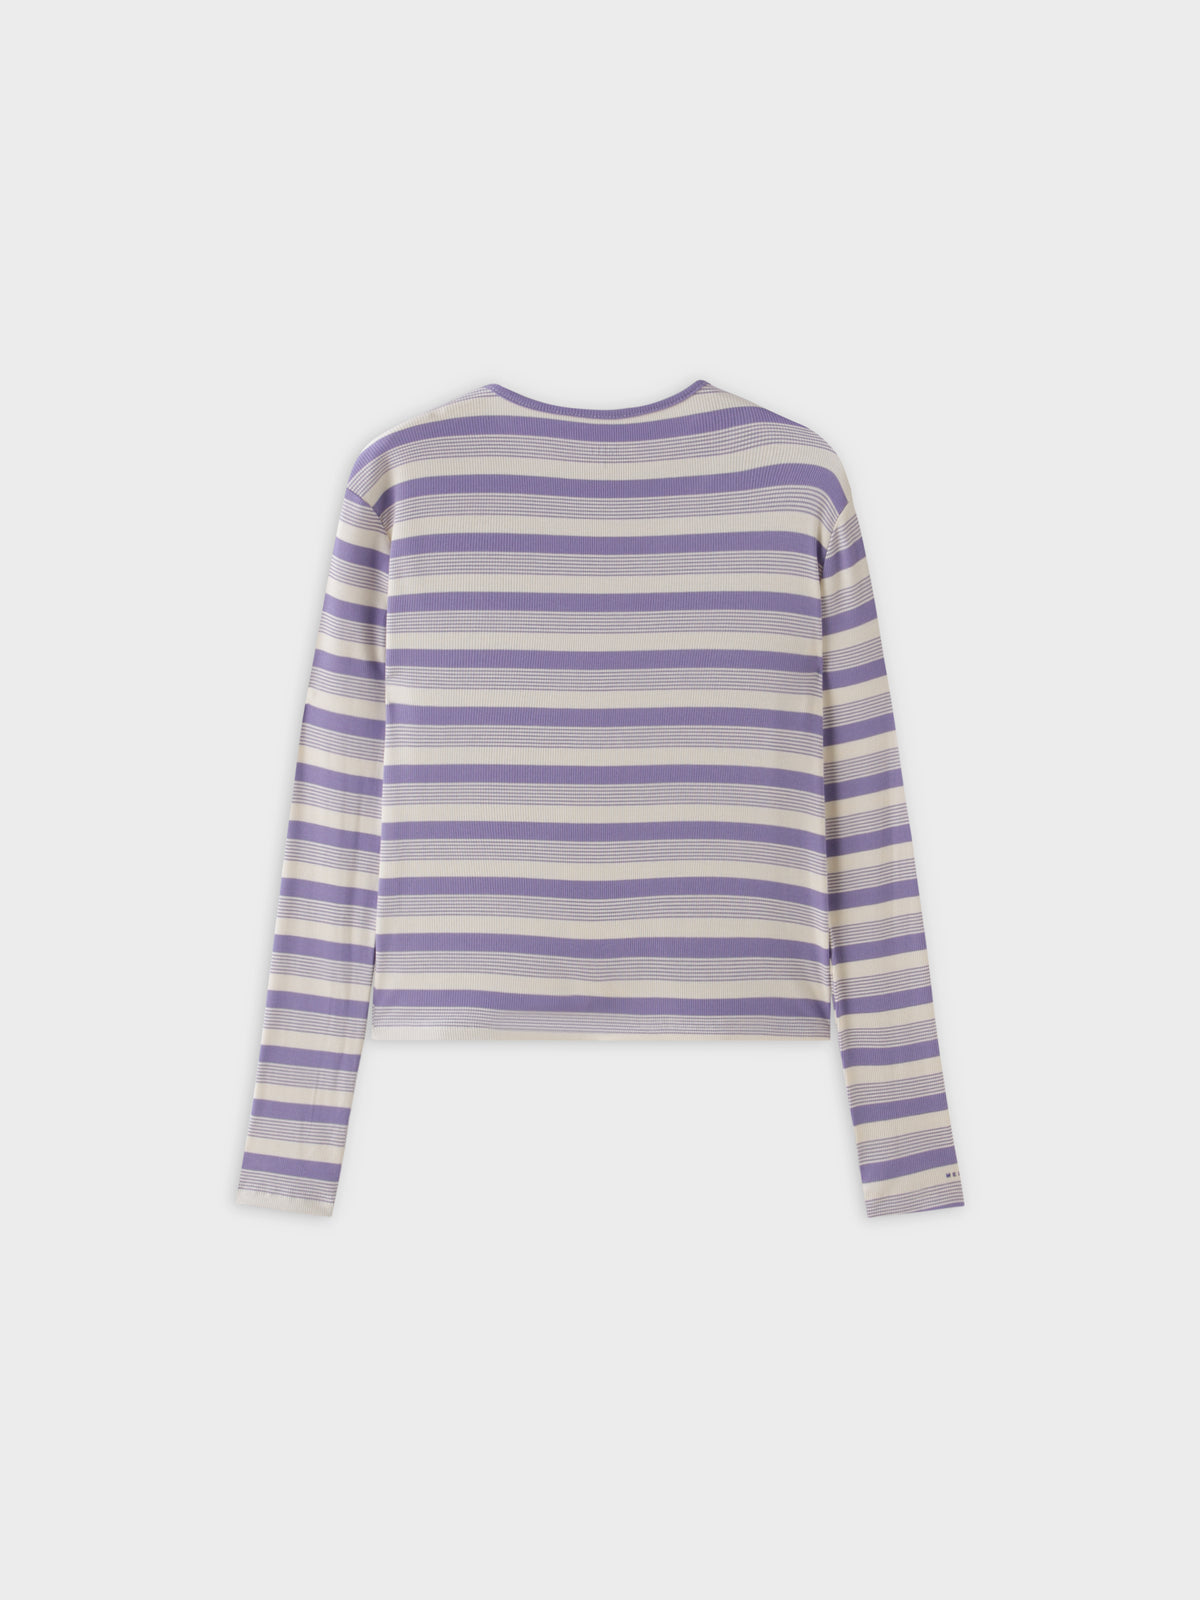 Striped Wrap Tee-Lavender/White Multi Stripe